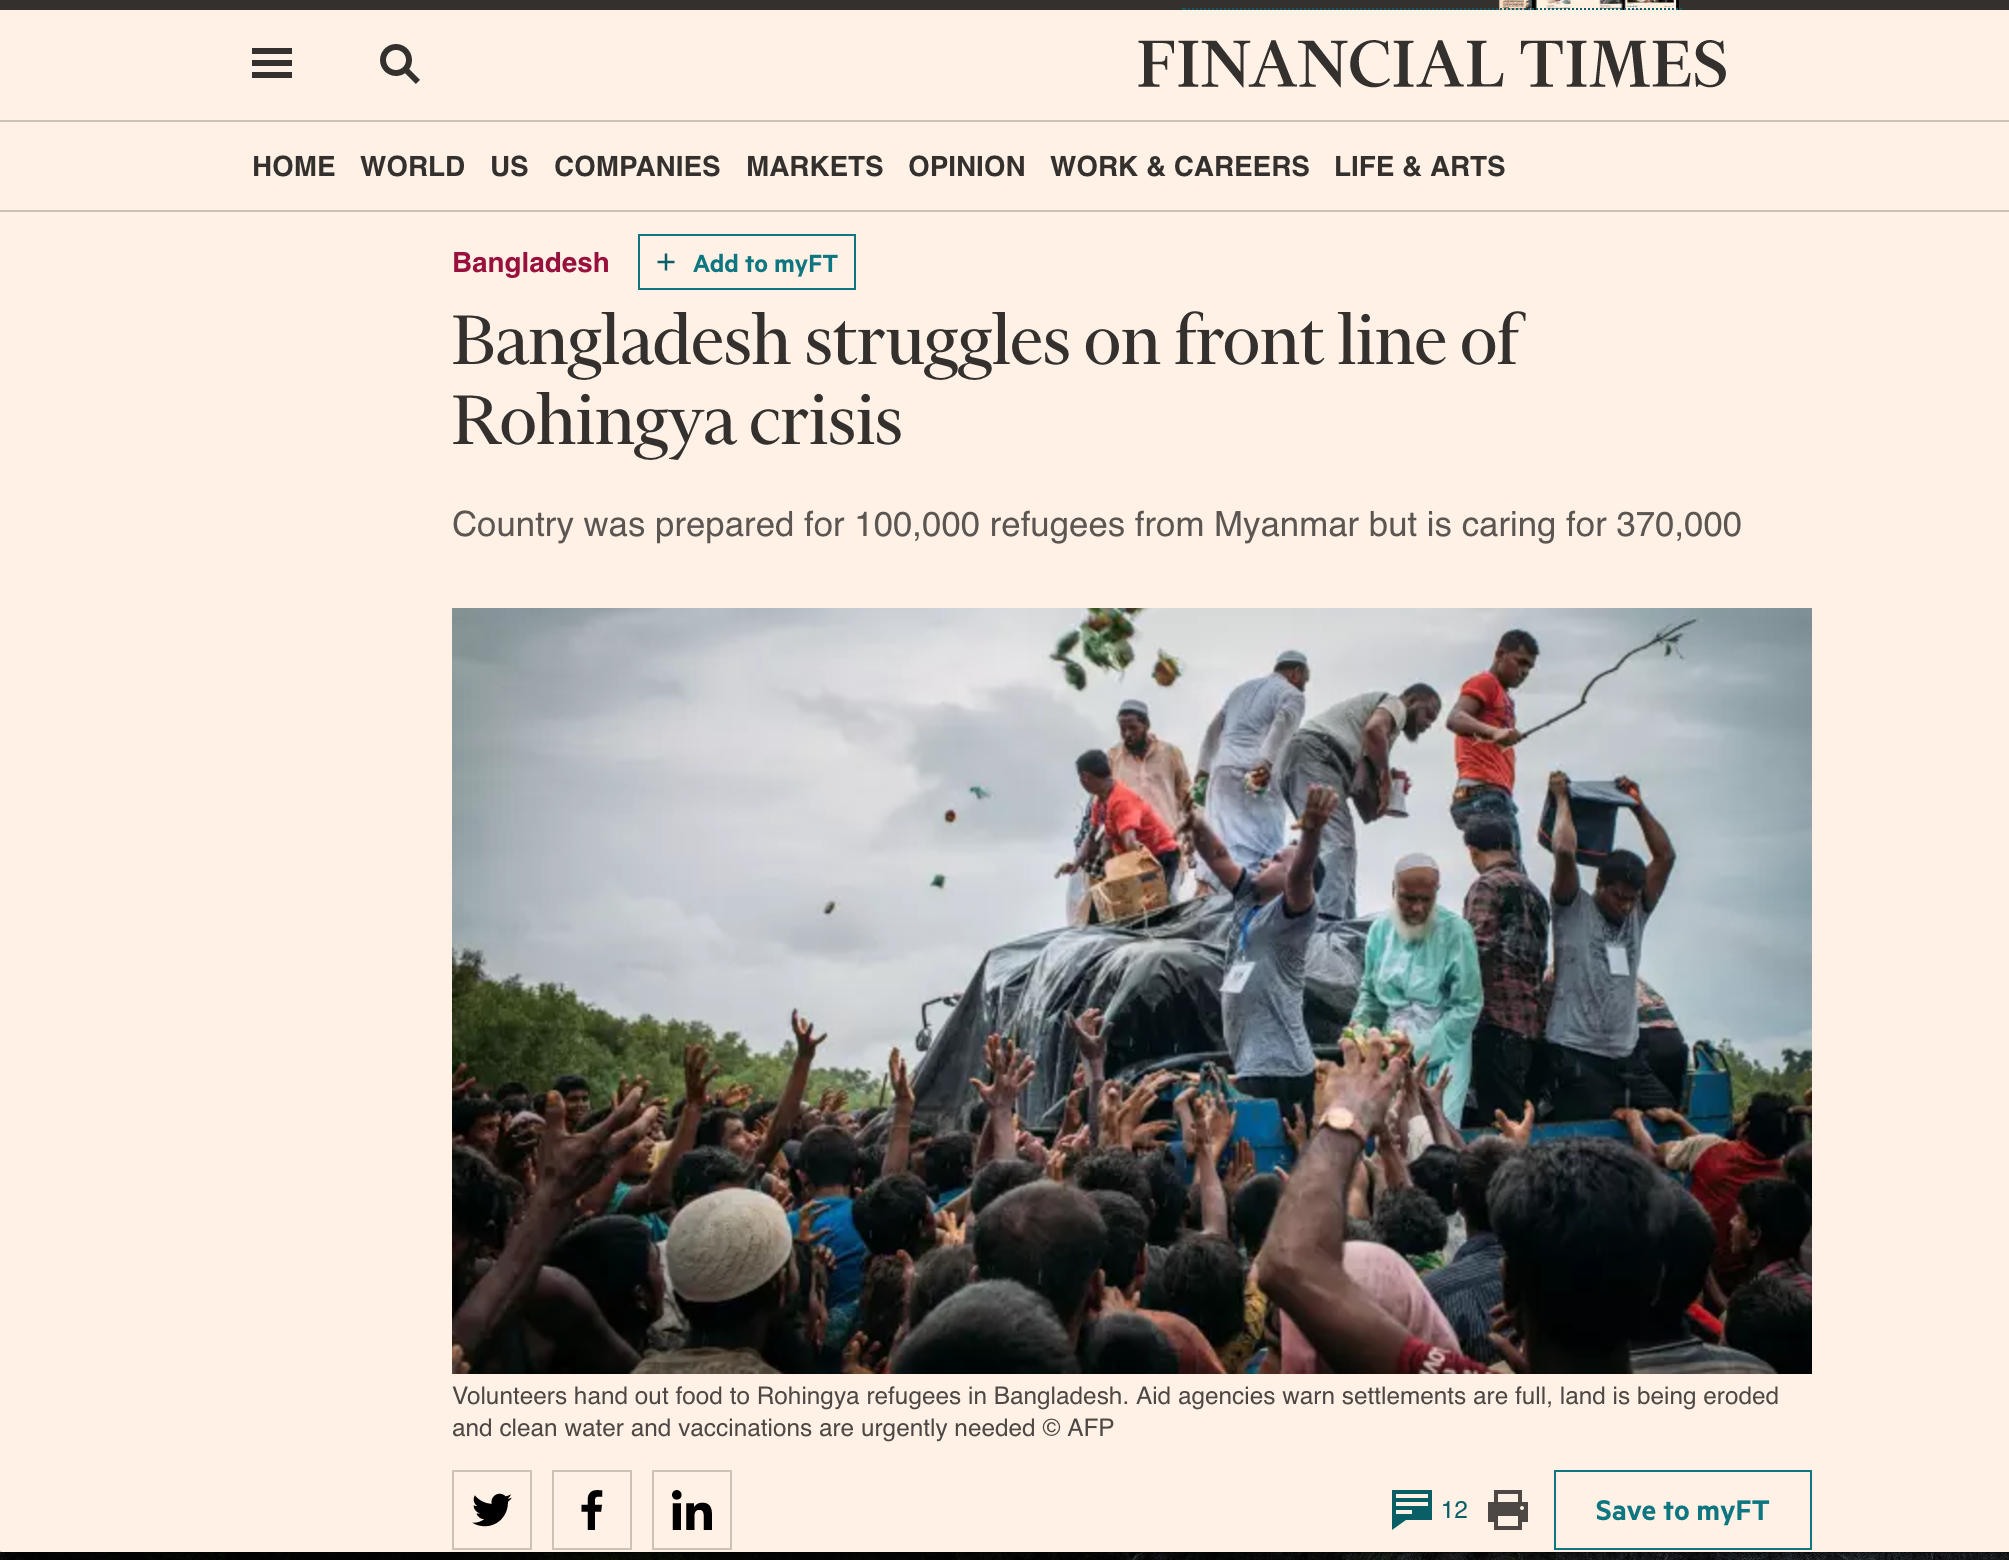 Financial Times, September 2017